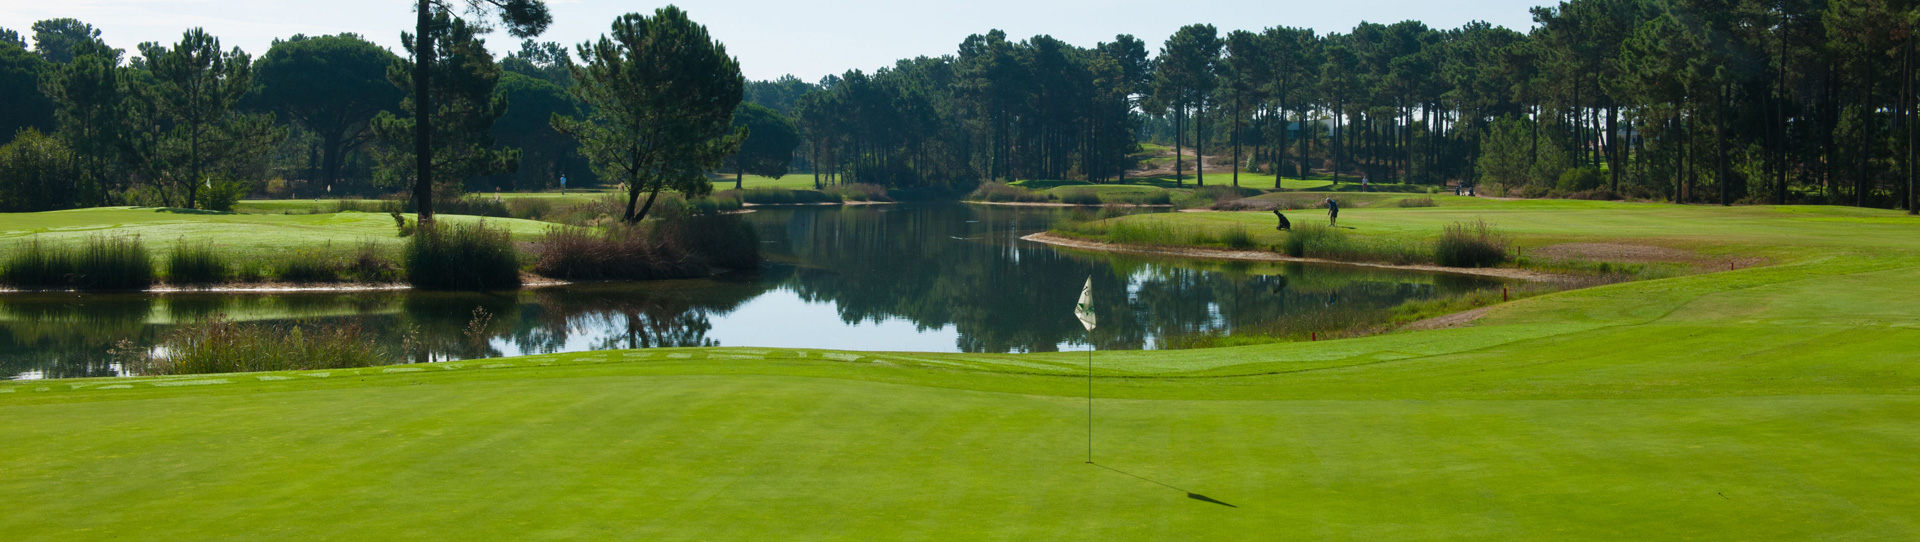 Portugal golf courses - Aroeira Challenge Golf Course (ex Aroeira II)  - Photo 2